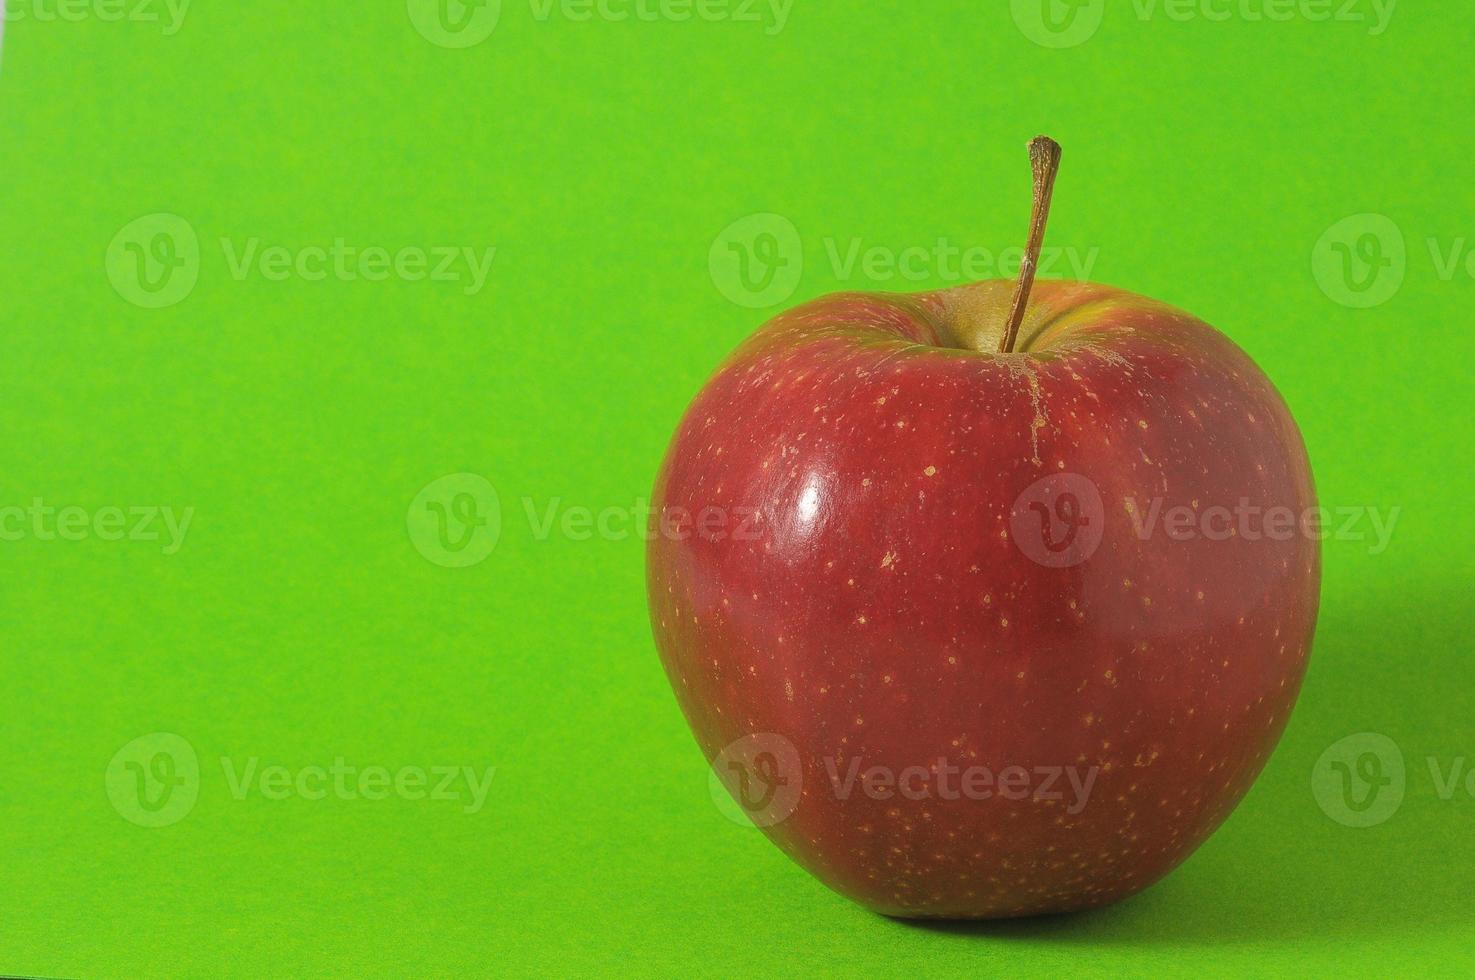 manzana roja aislada foto